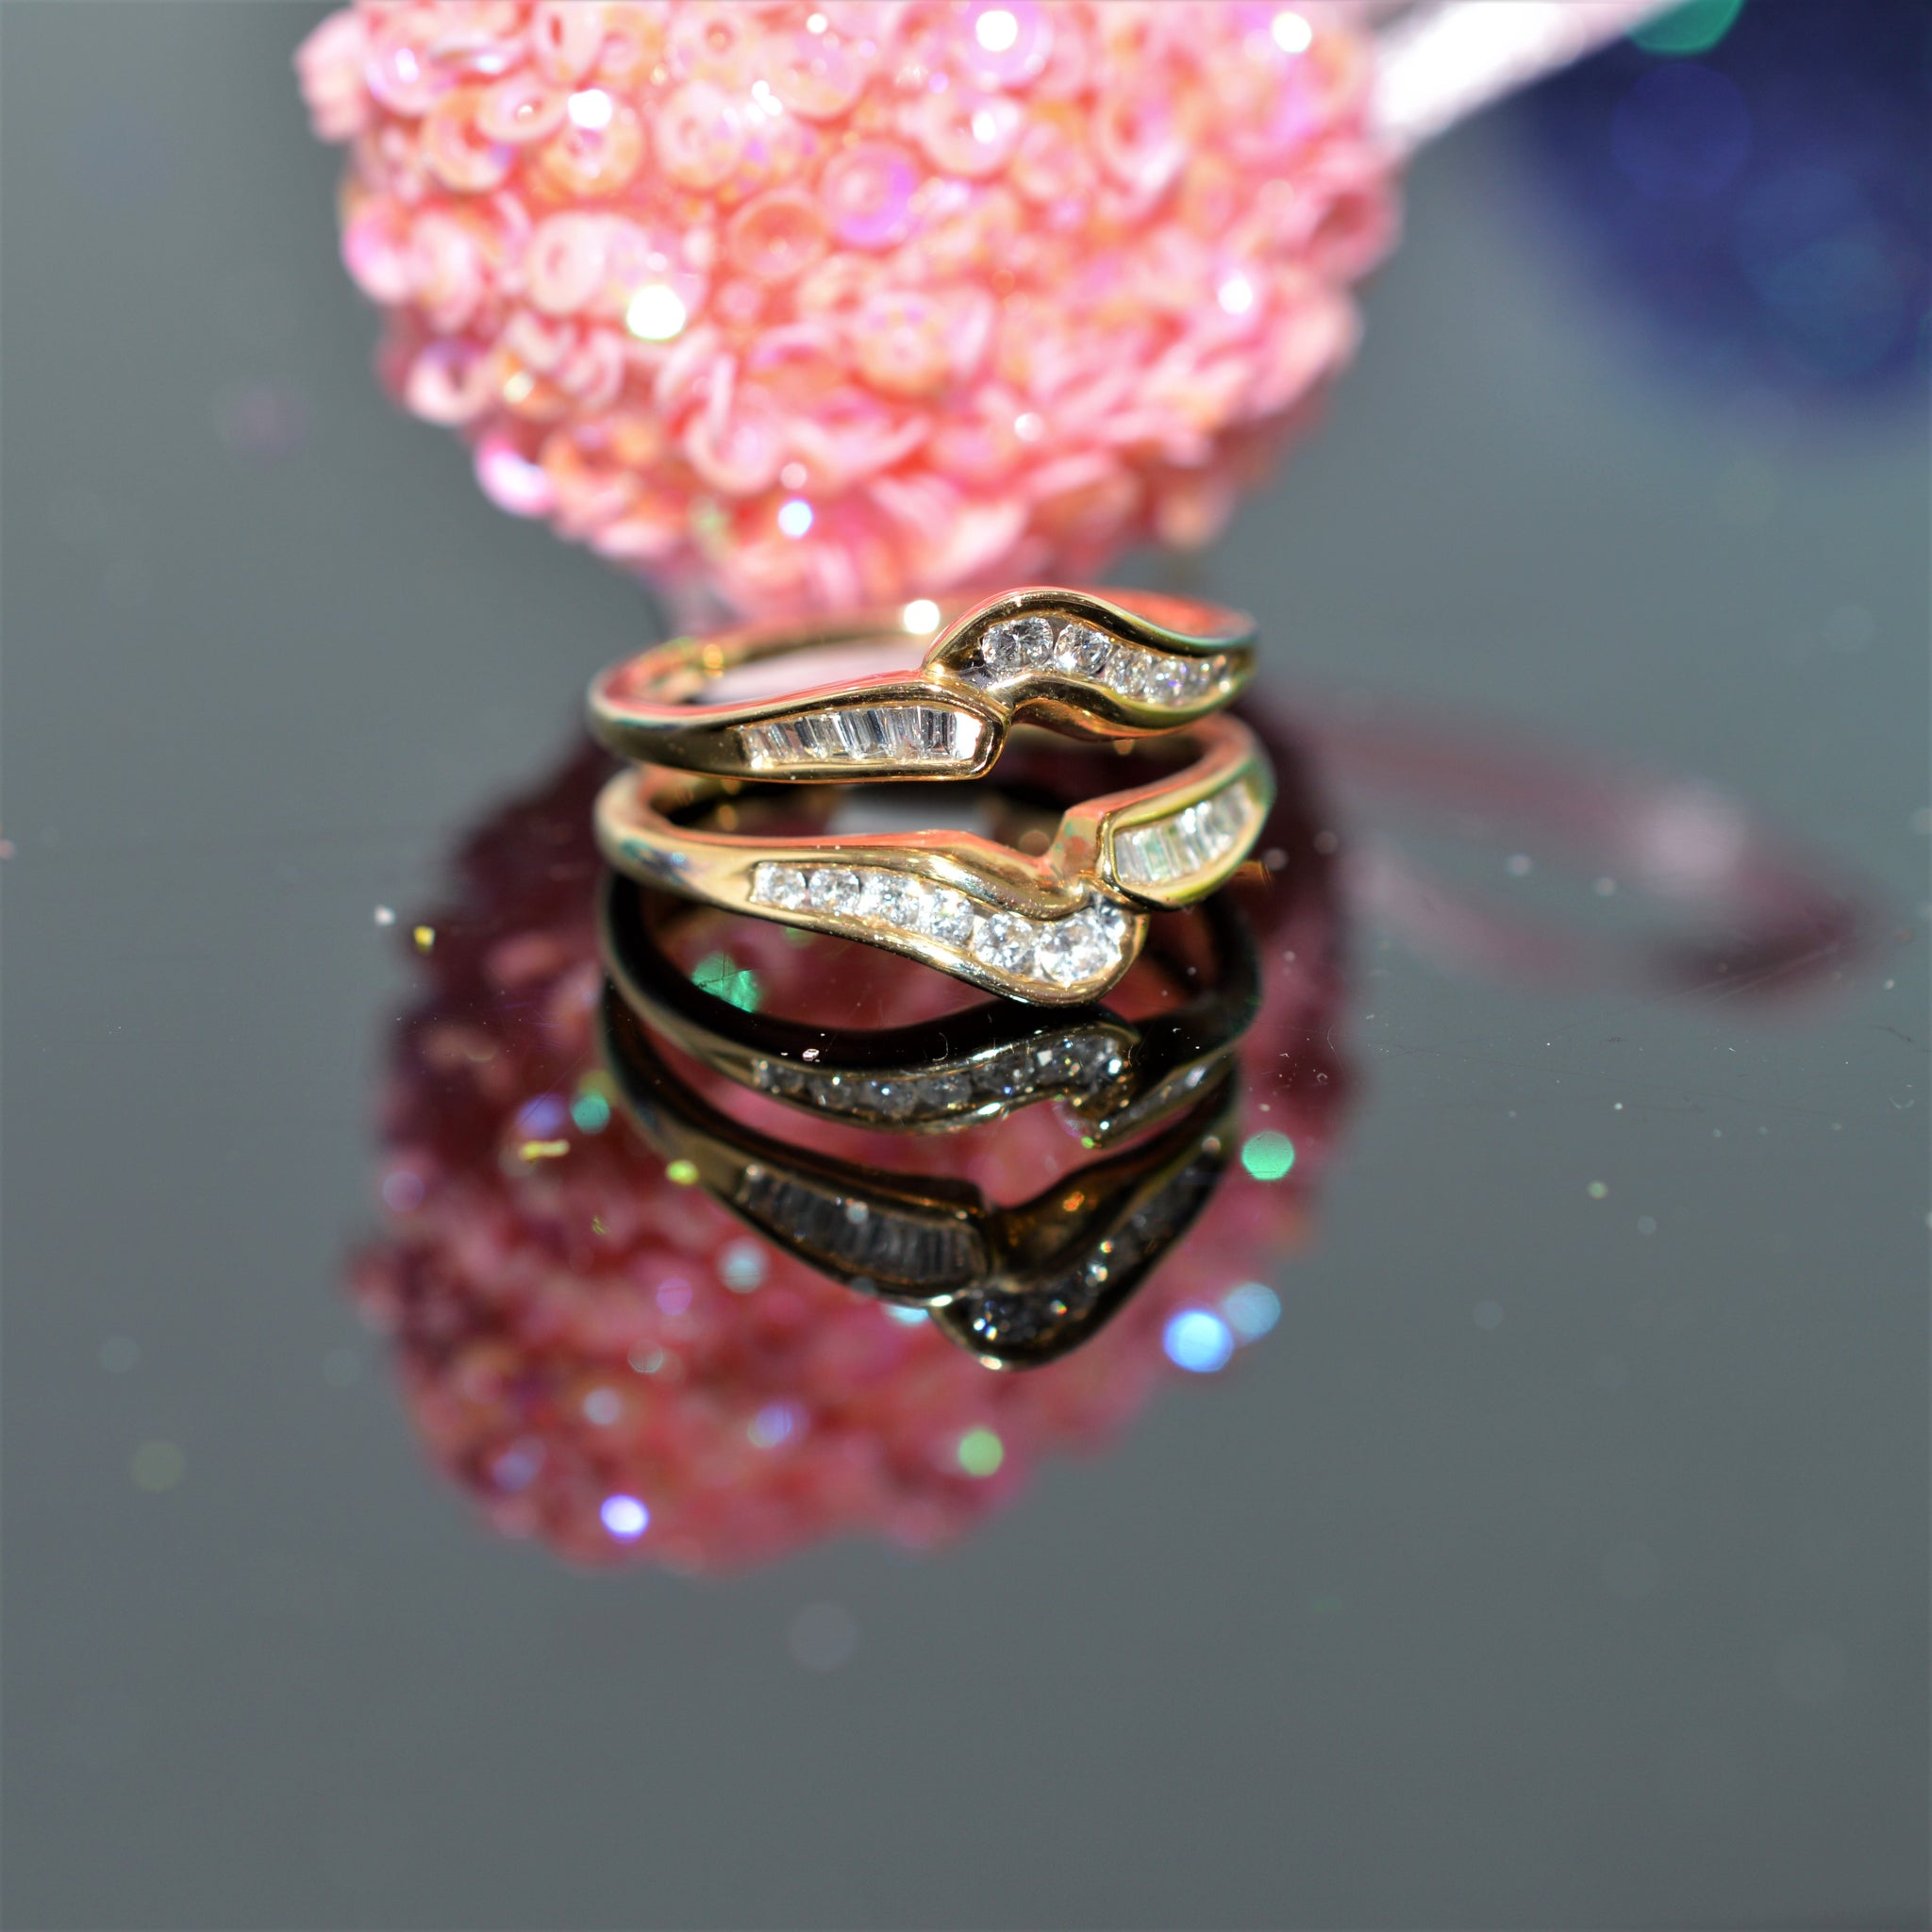 14K White Gold Vintage Filigree Engagement Ring - 39913179